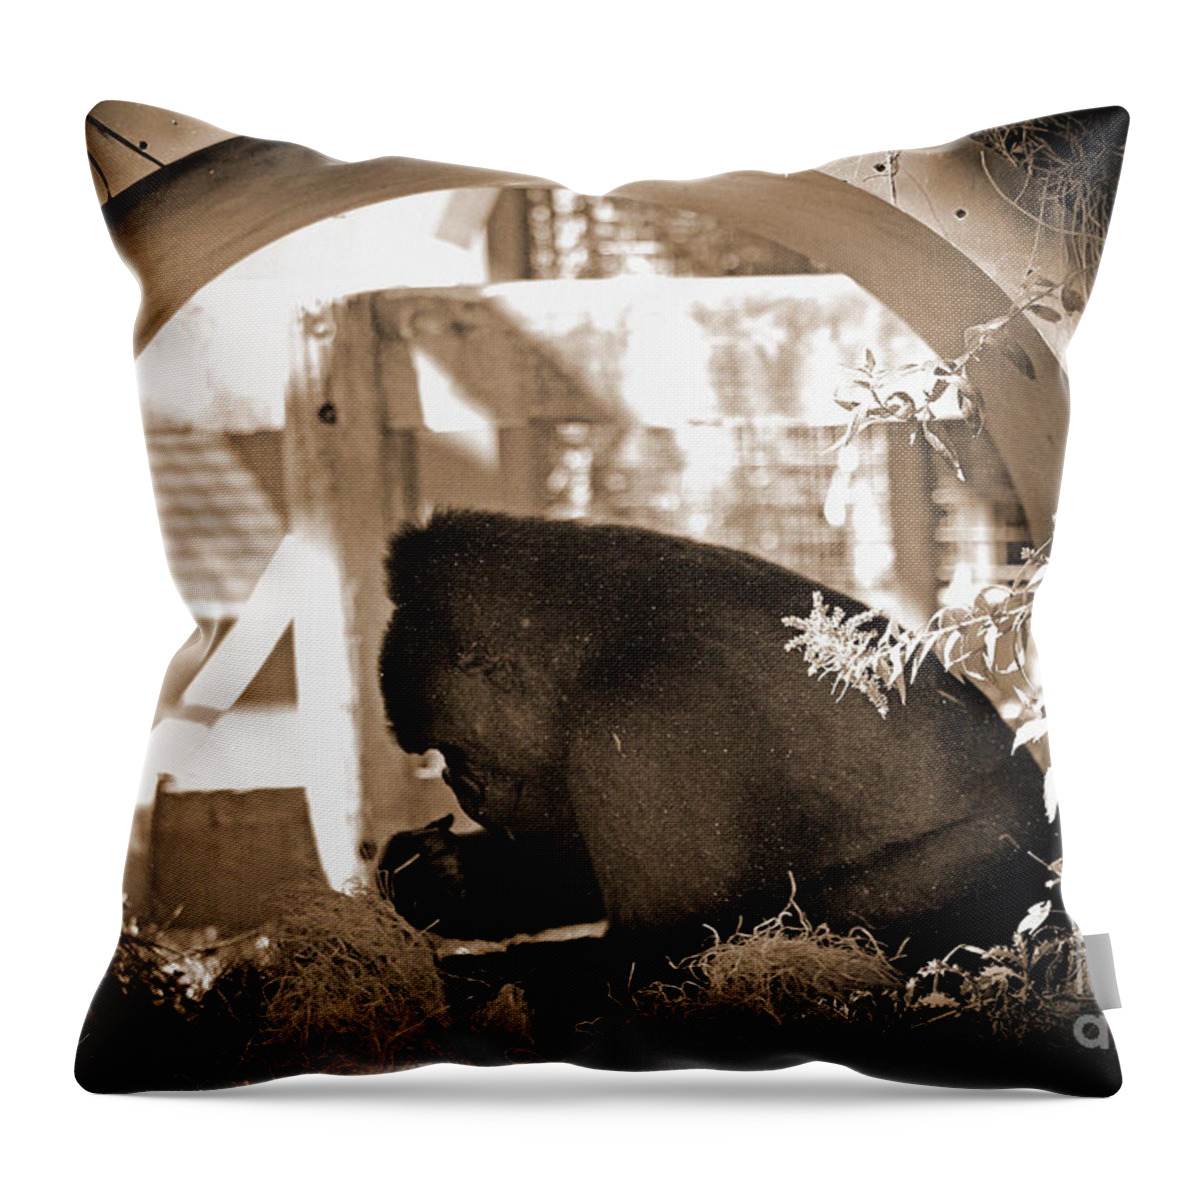 Monkey Throw Pillow featuring the photograph Gorilla by Karen Adams